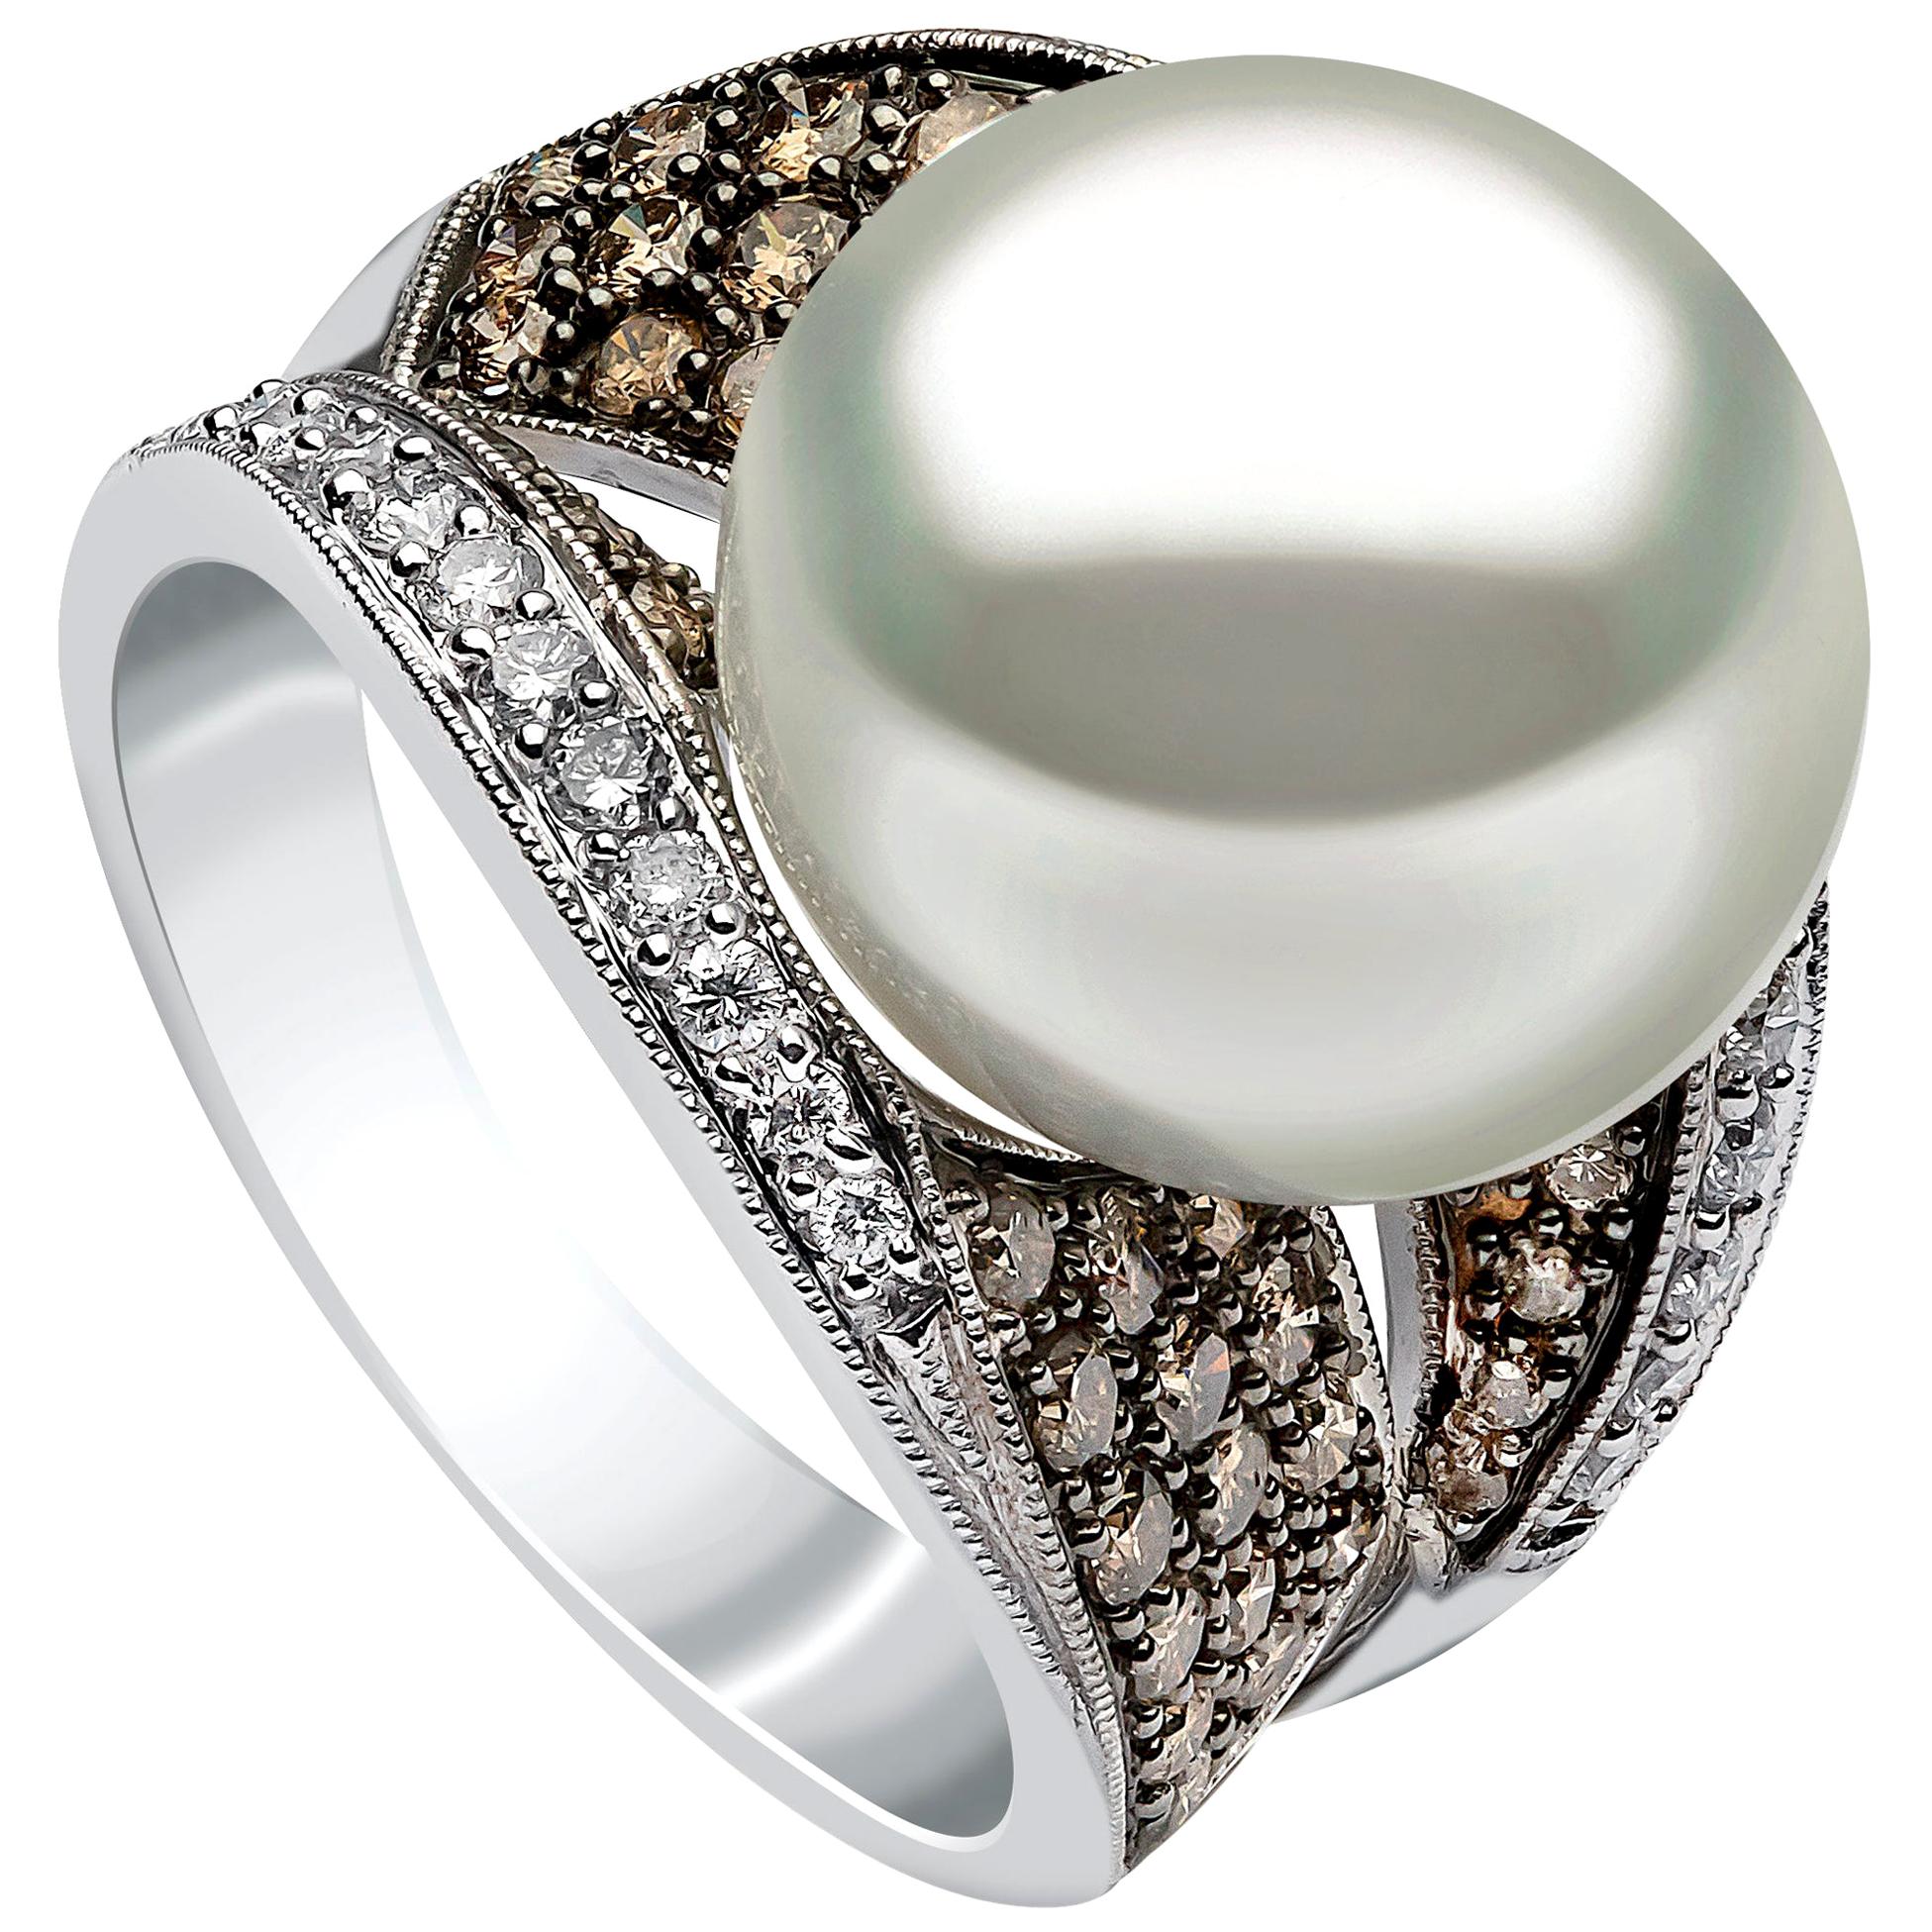 Yoko London Pearls South Sea Pearl and Diamond Ring in 18 Carat White Gold